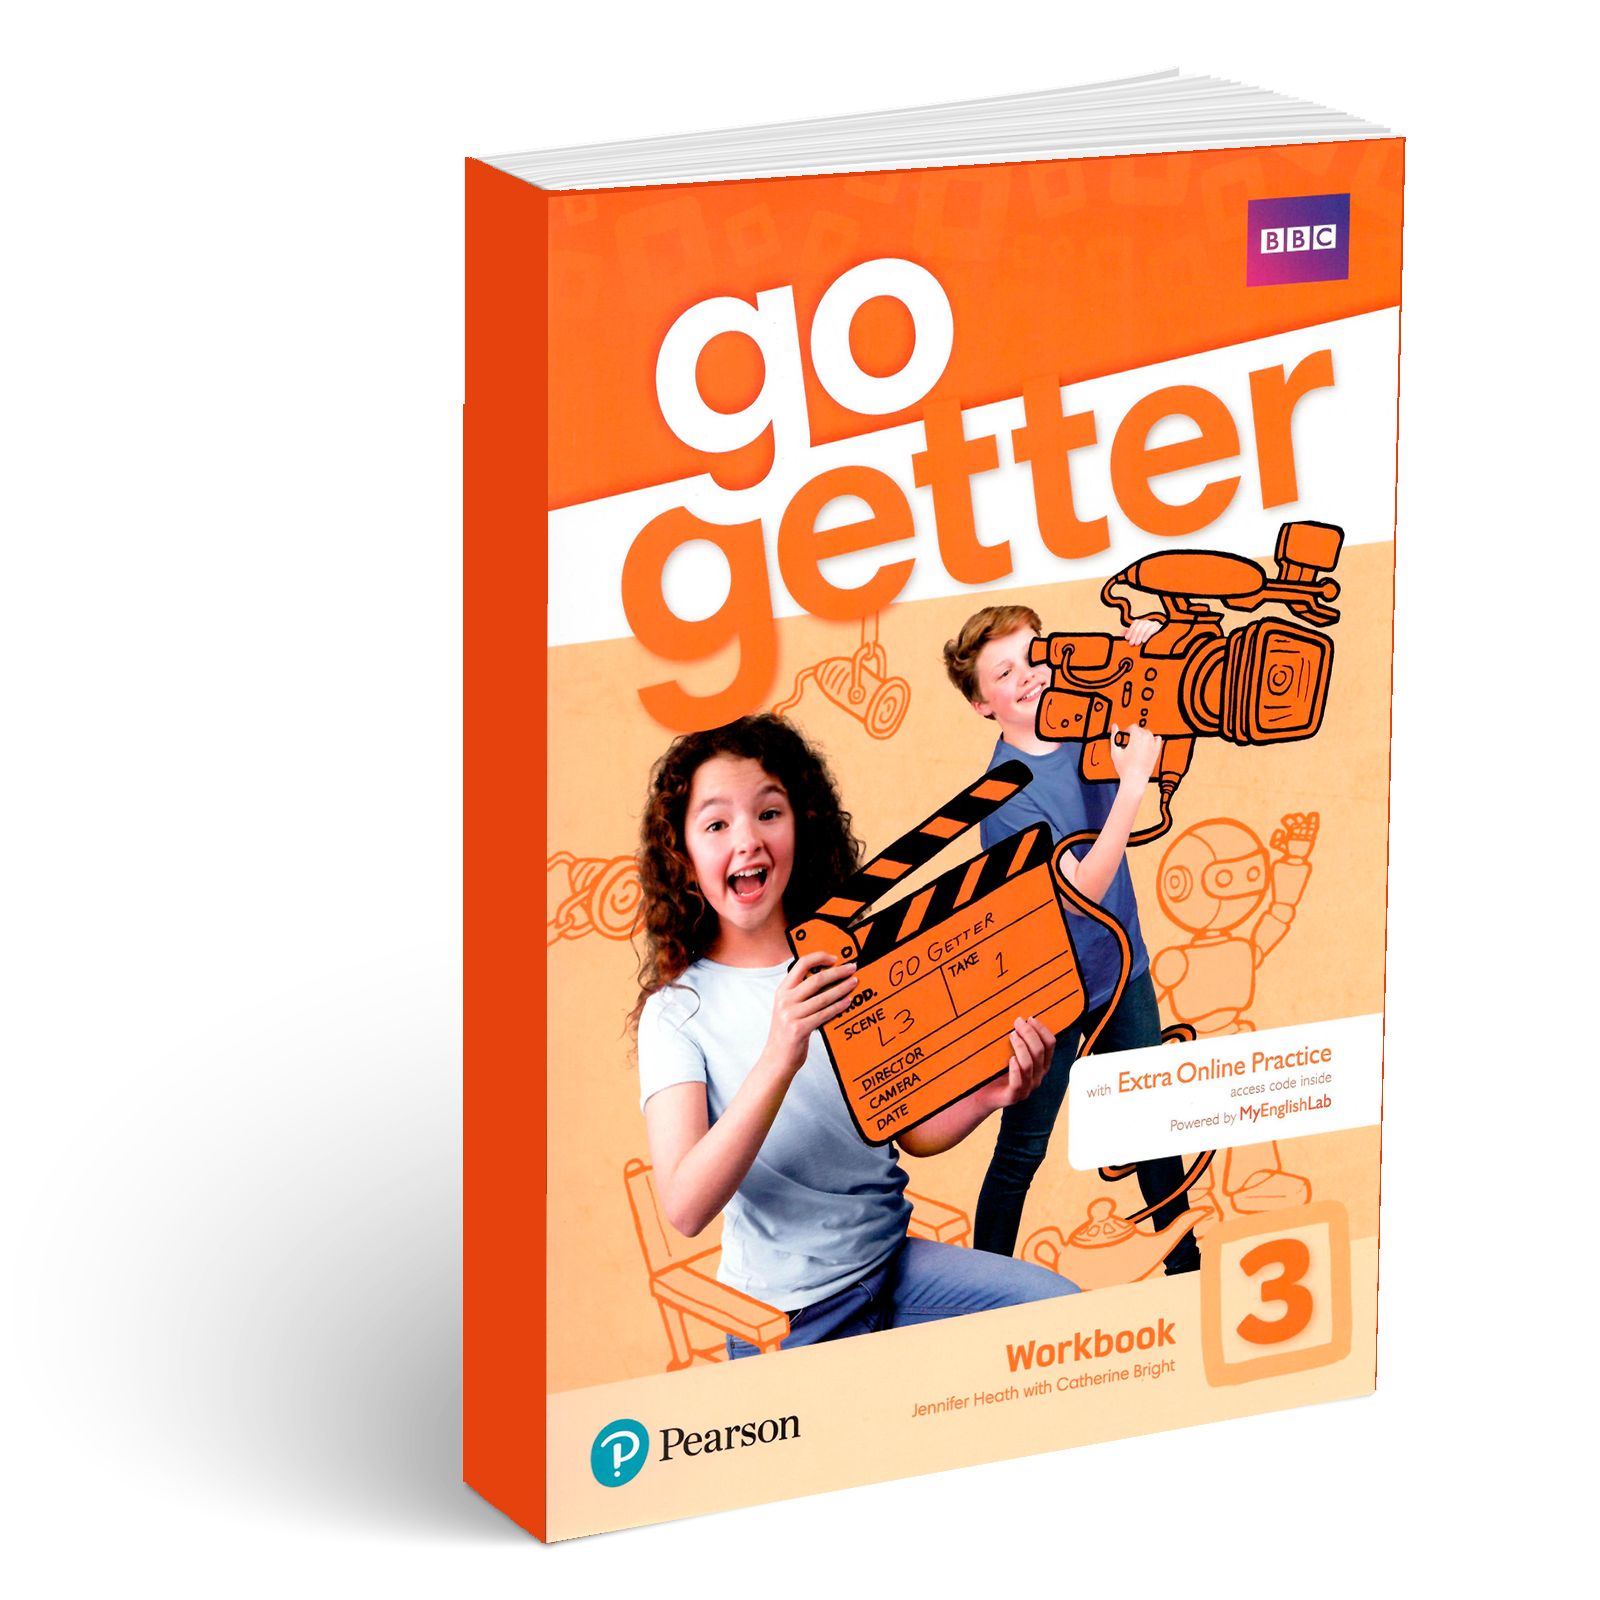 Go getter 3 страница 3. Go Getter 3 Workbook. Go Getter учебник. Учебник go Getter 3. Gogetter 3 students book.